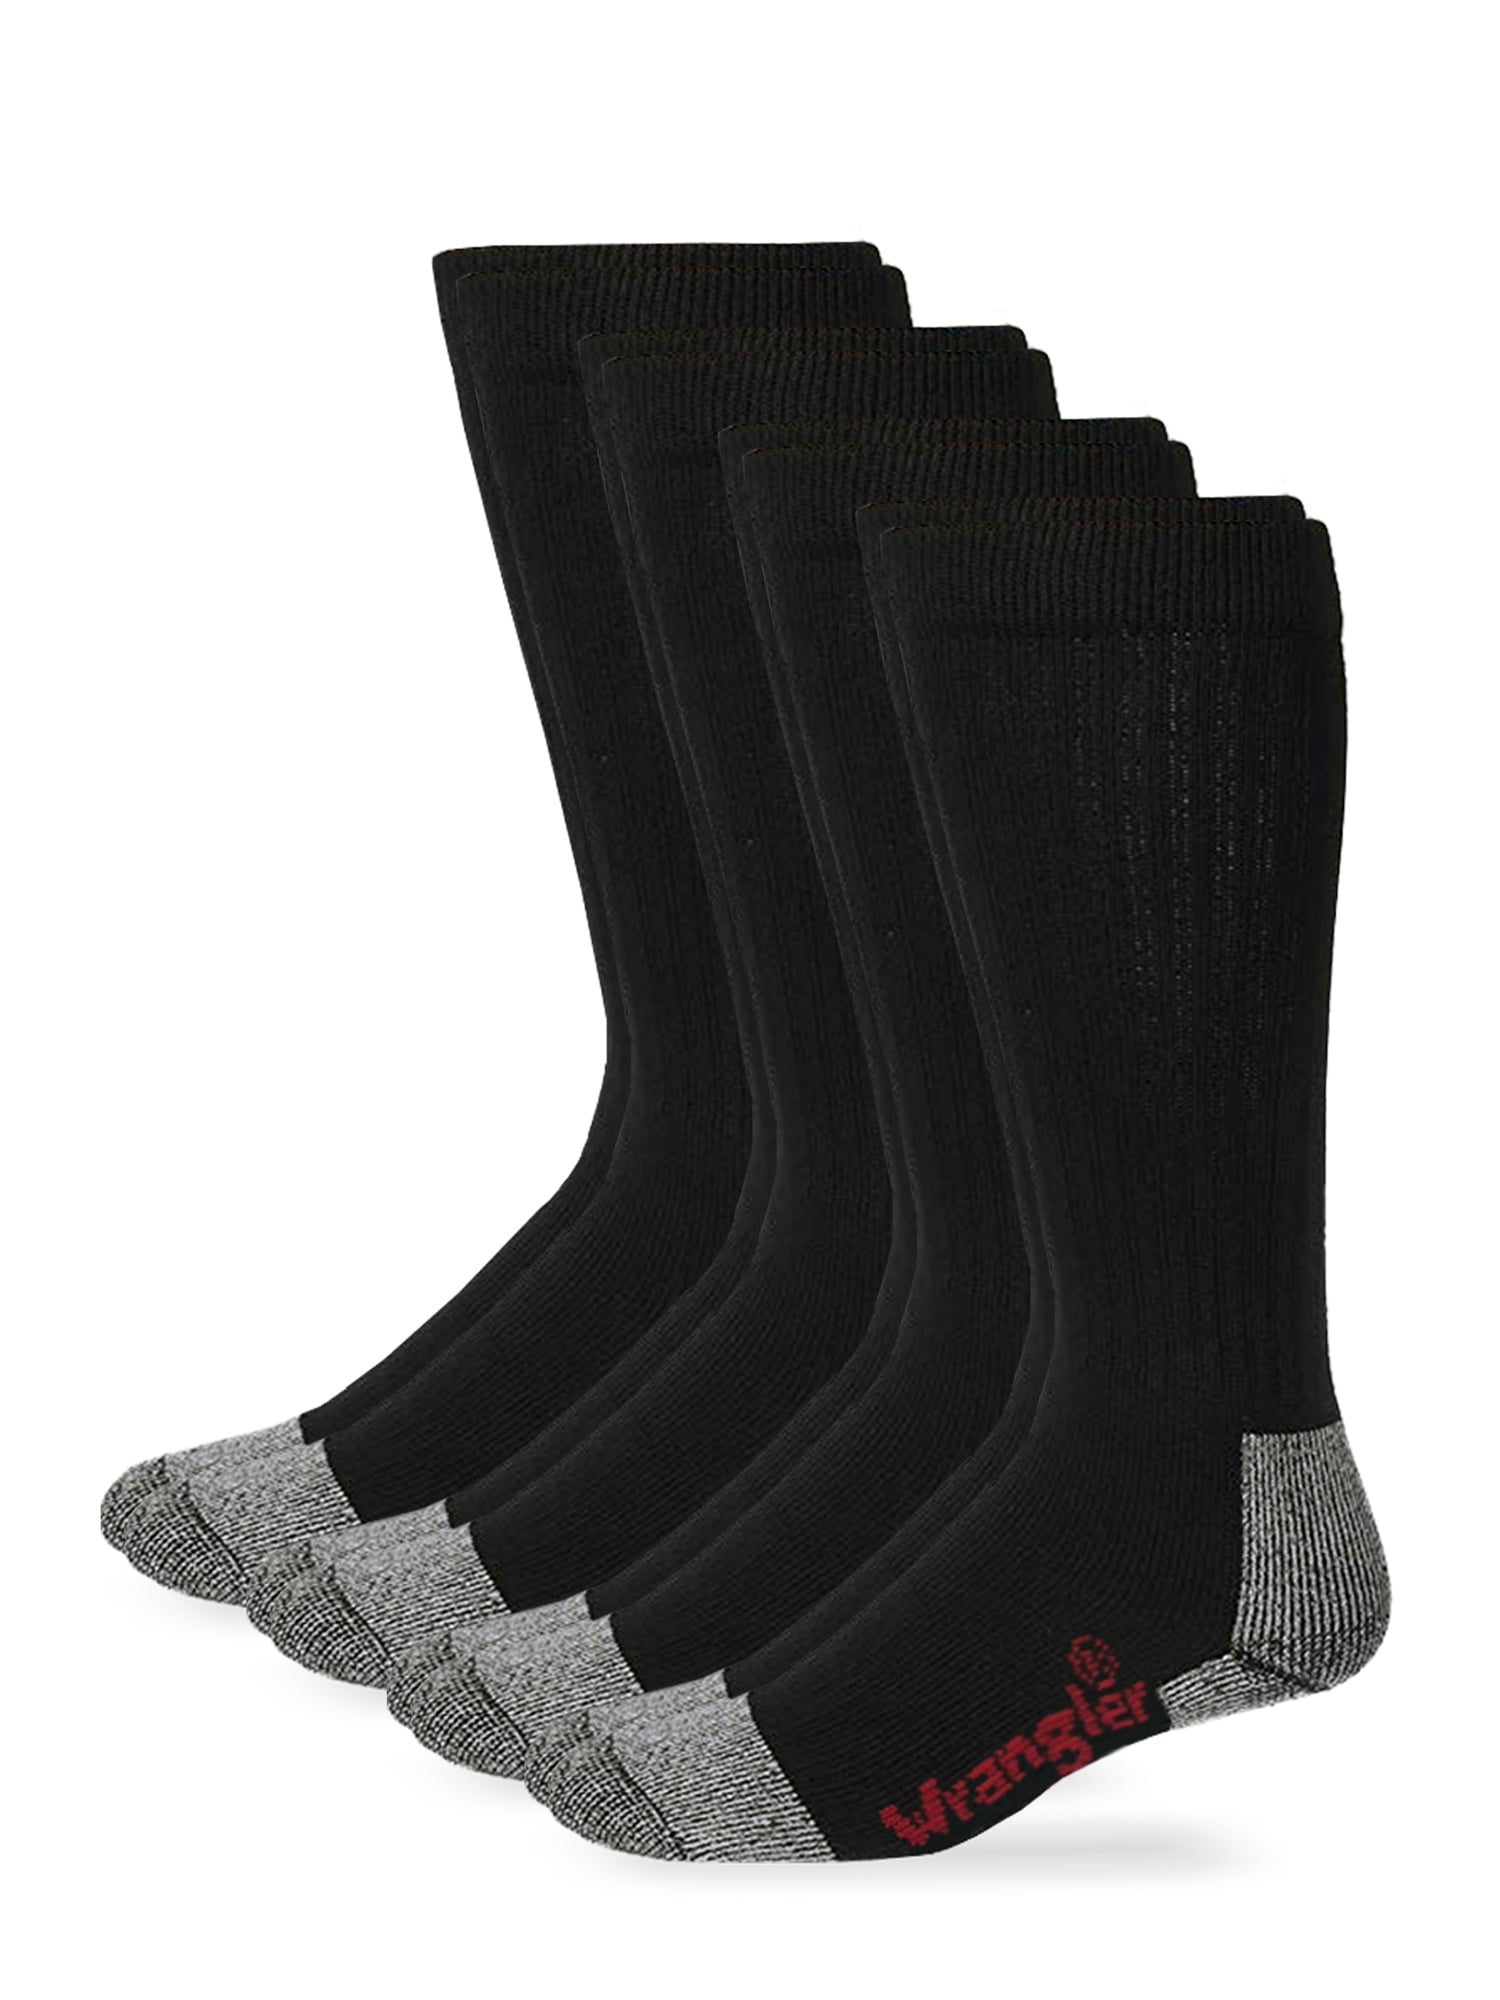 3 x Pairs Of Blackrock Boot Socks Black & Grey Warm & Tough Work Wear BRBS3P 